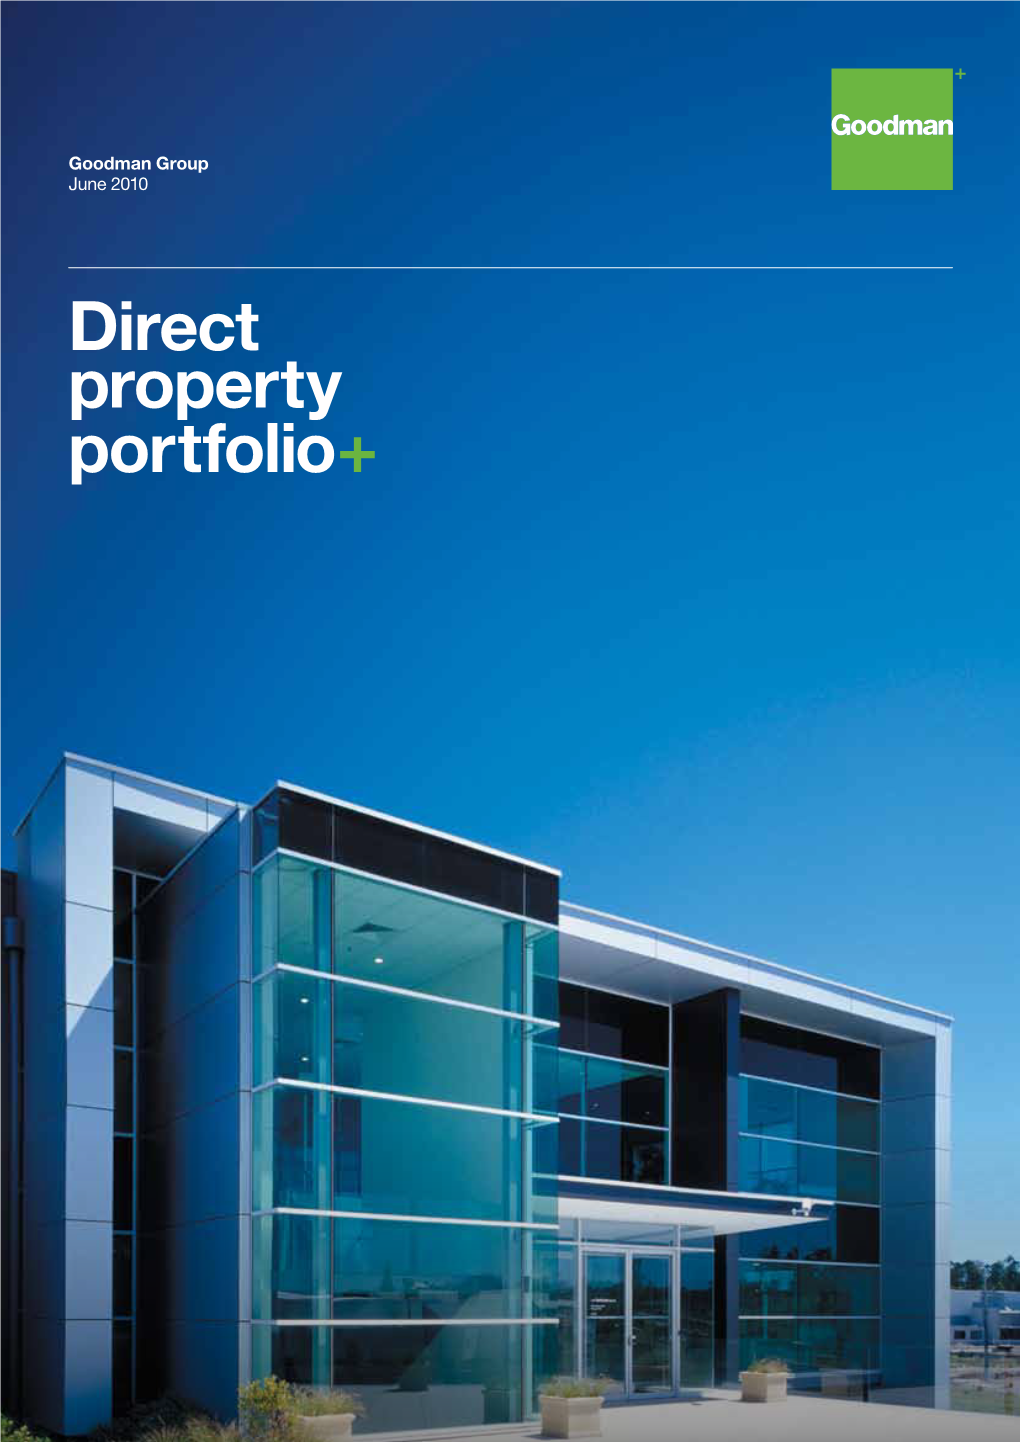 Direct Property Portfolio+ Property Details Asset Type Warehouse/Distribution Centre Acquisition Date Date Here Lettable Area Xx Sqm Book Value $14.20 Million